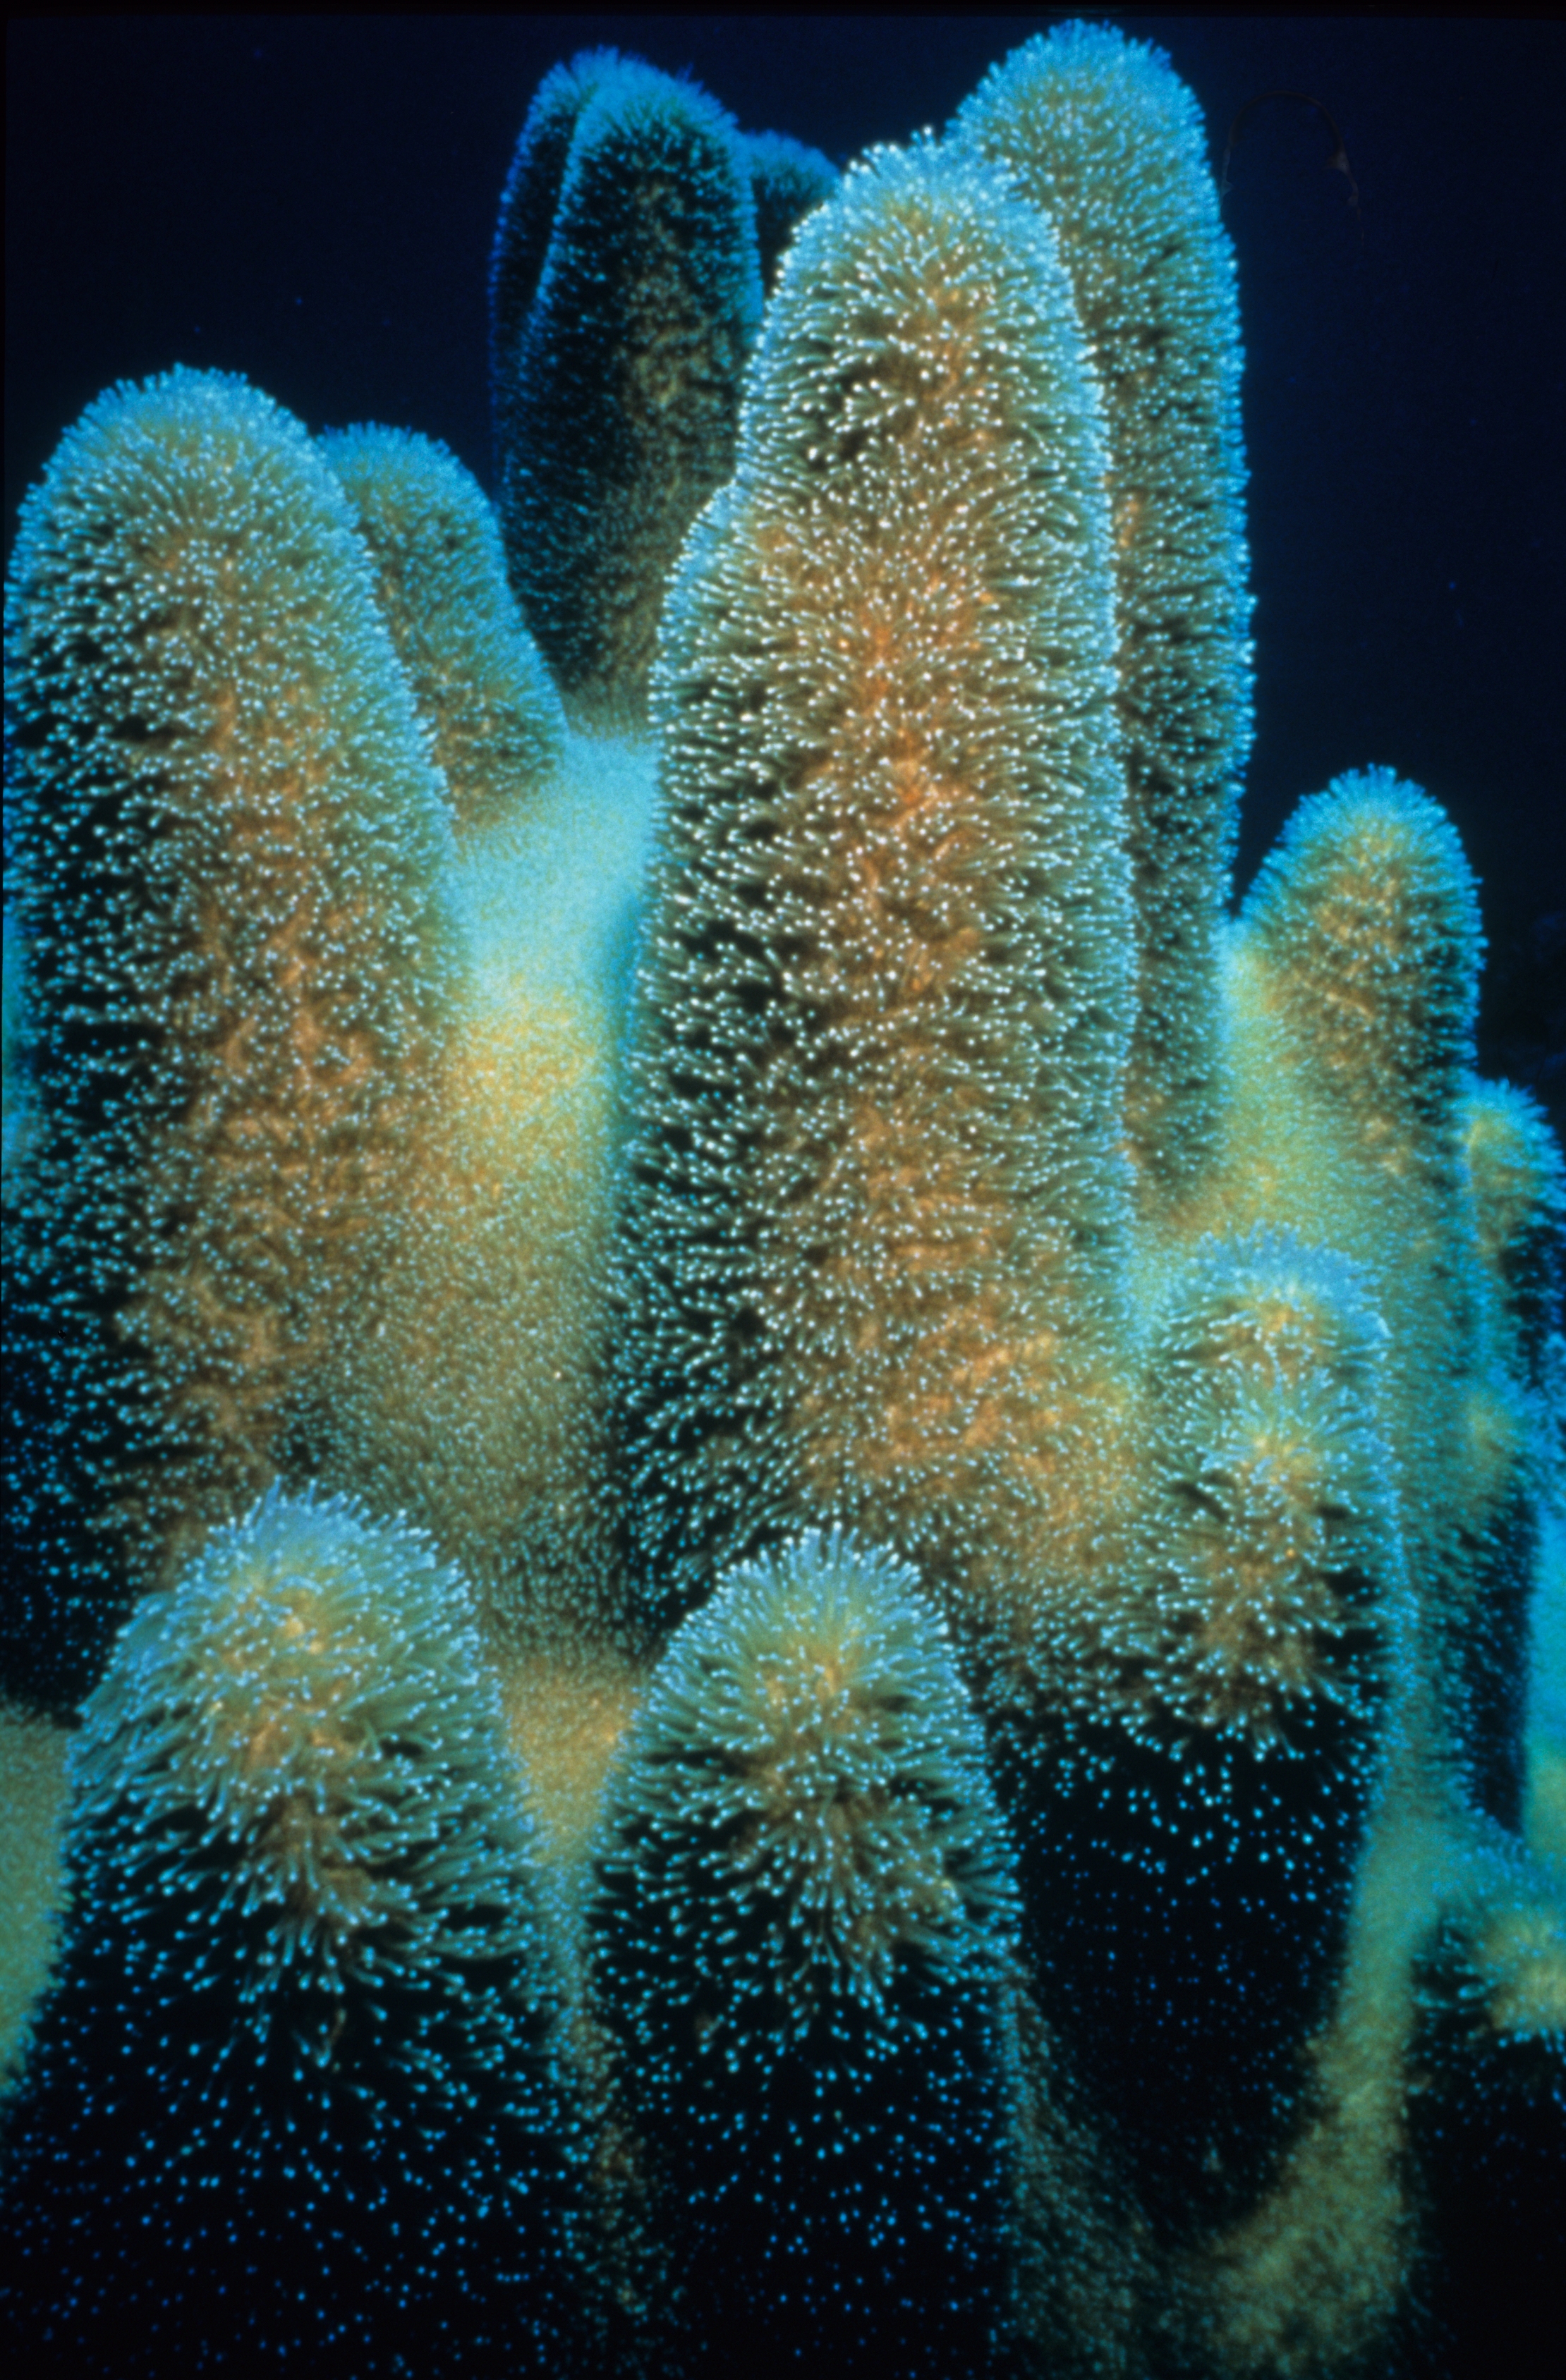 [Pillar coral] Photo by William Harrigan, NOAA Corps (ret.).